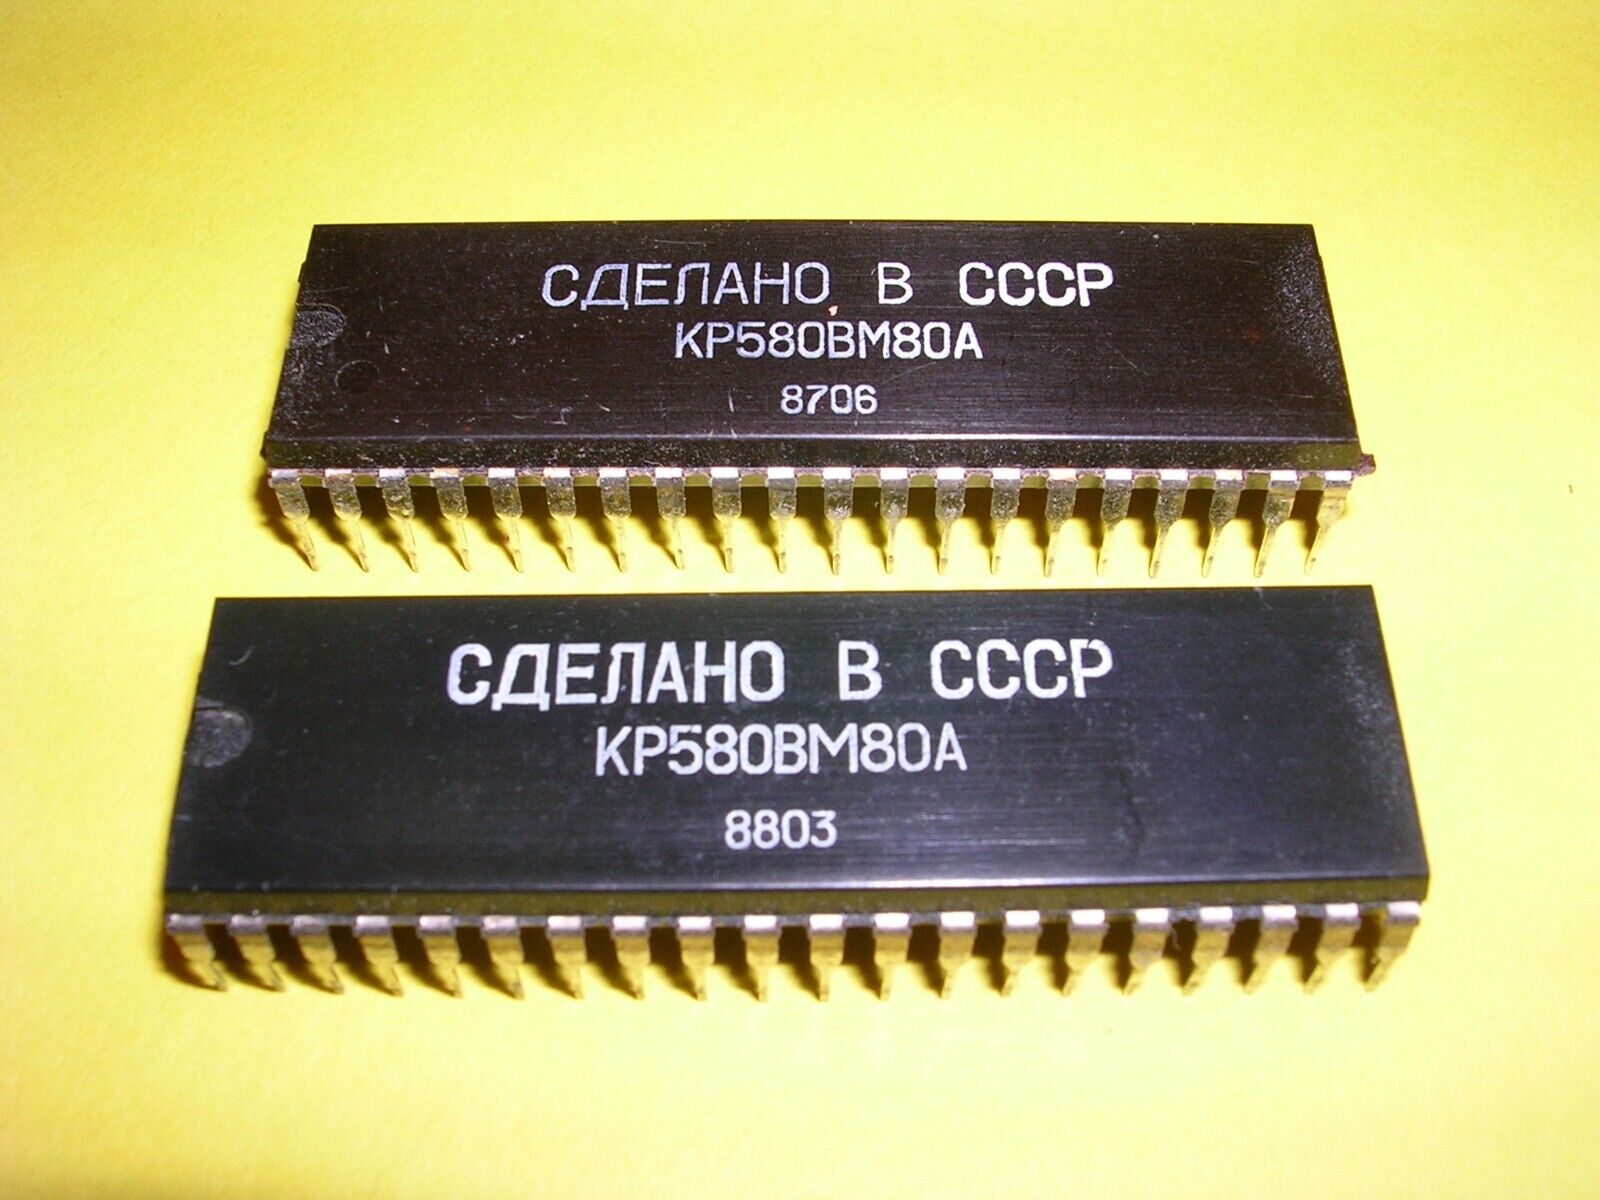 Two (2) KP580BM80A CCCP / USSR / Russian Clone of an Intel P8080A (8080) CPU